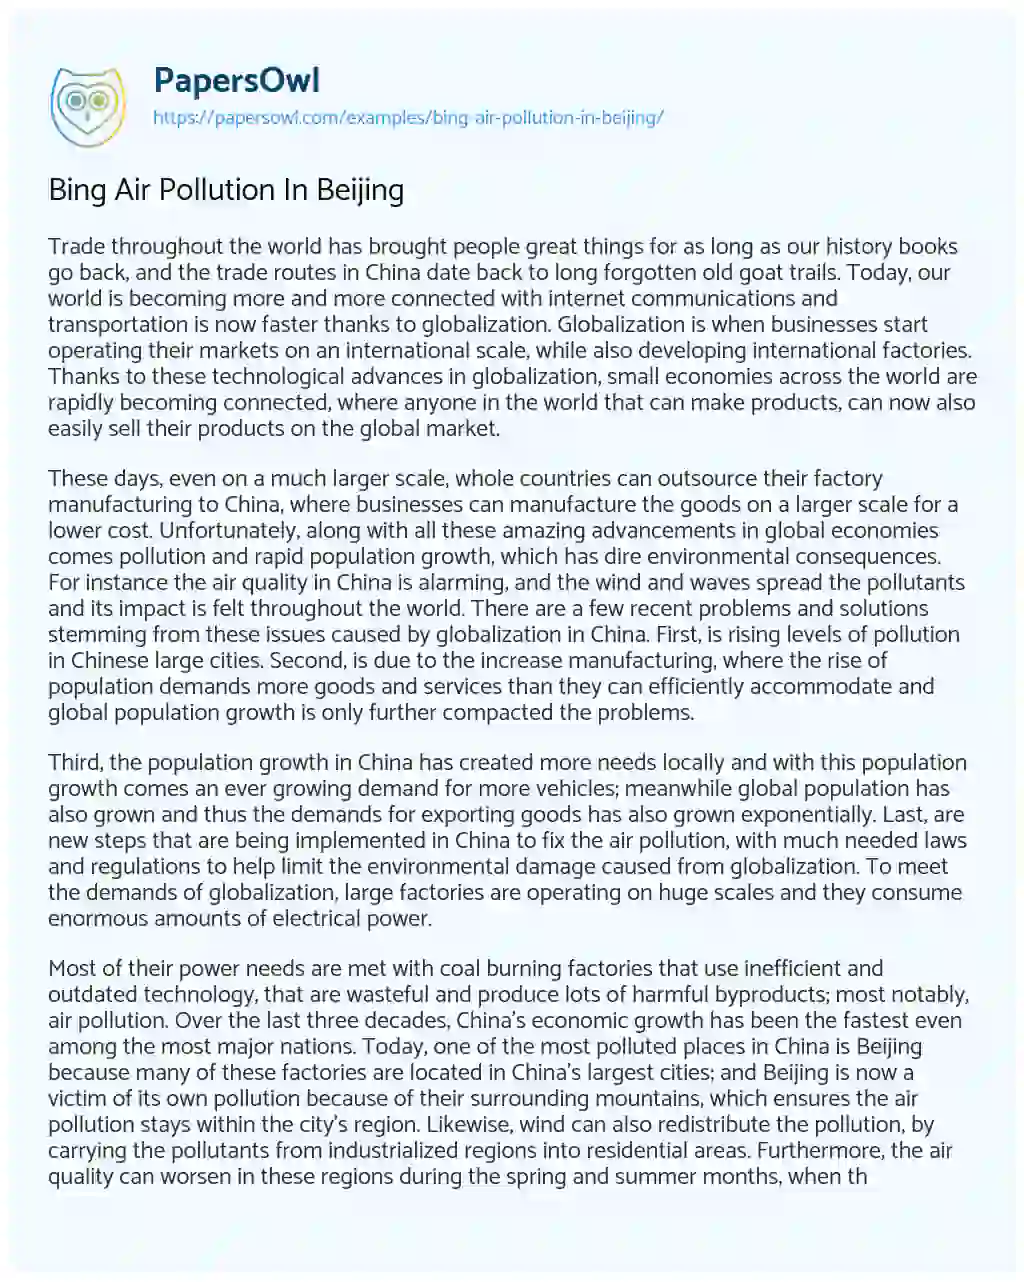 Essay on Bing Air Pollution in Beijing